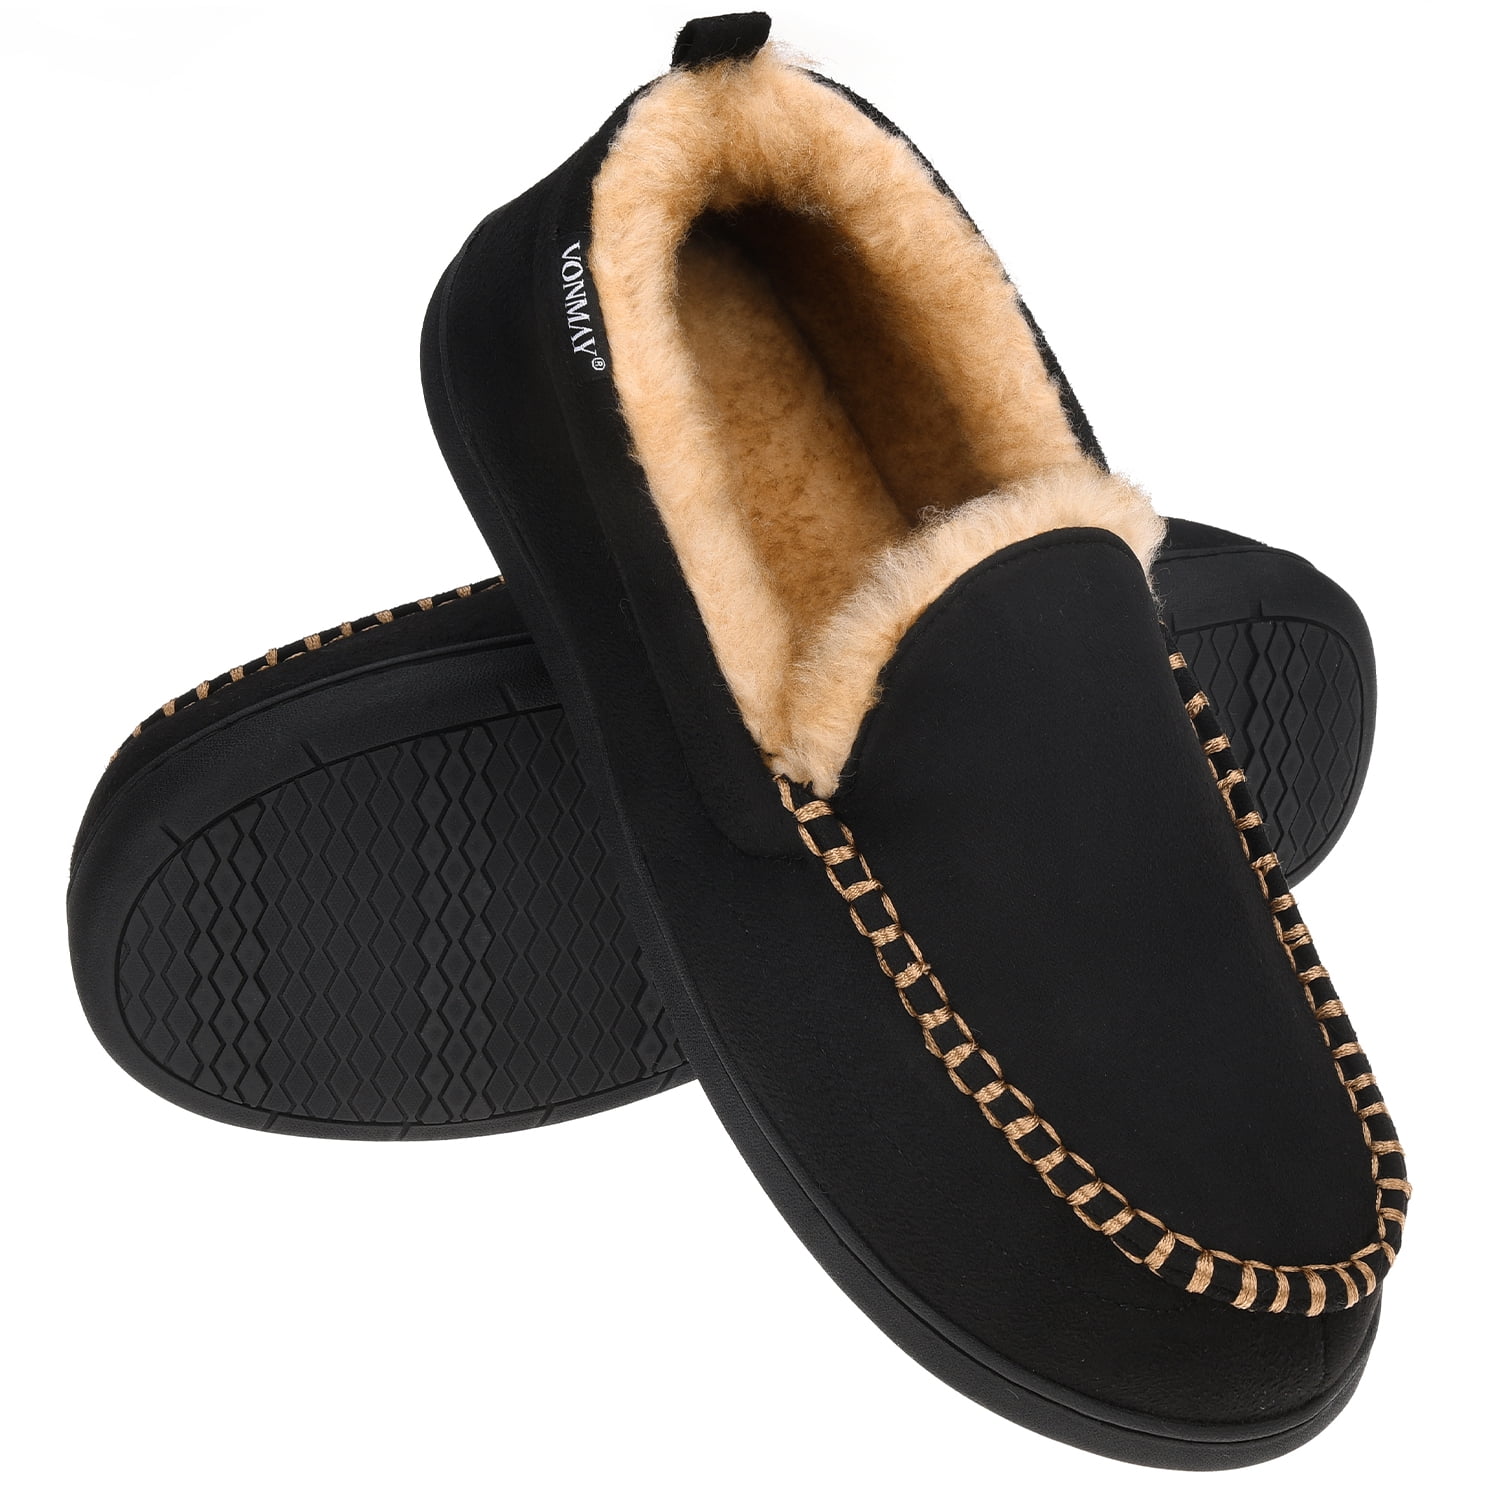 Details 151+ mens fuzzy slippers - esthdonghoadian